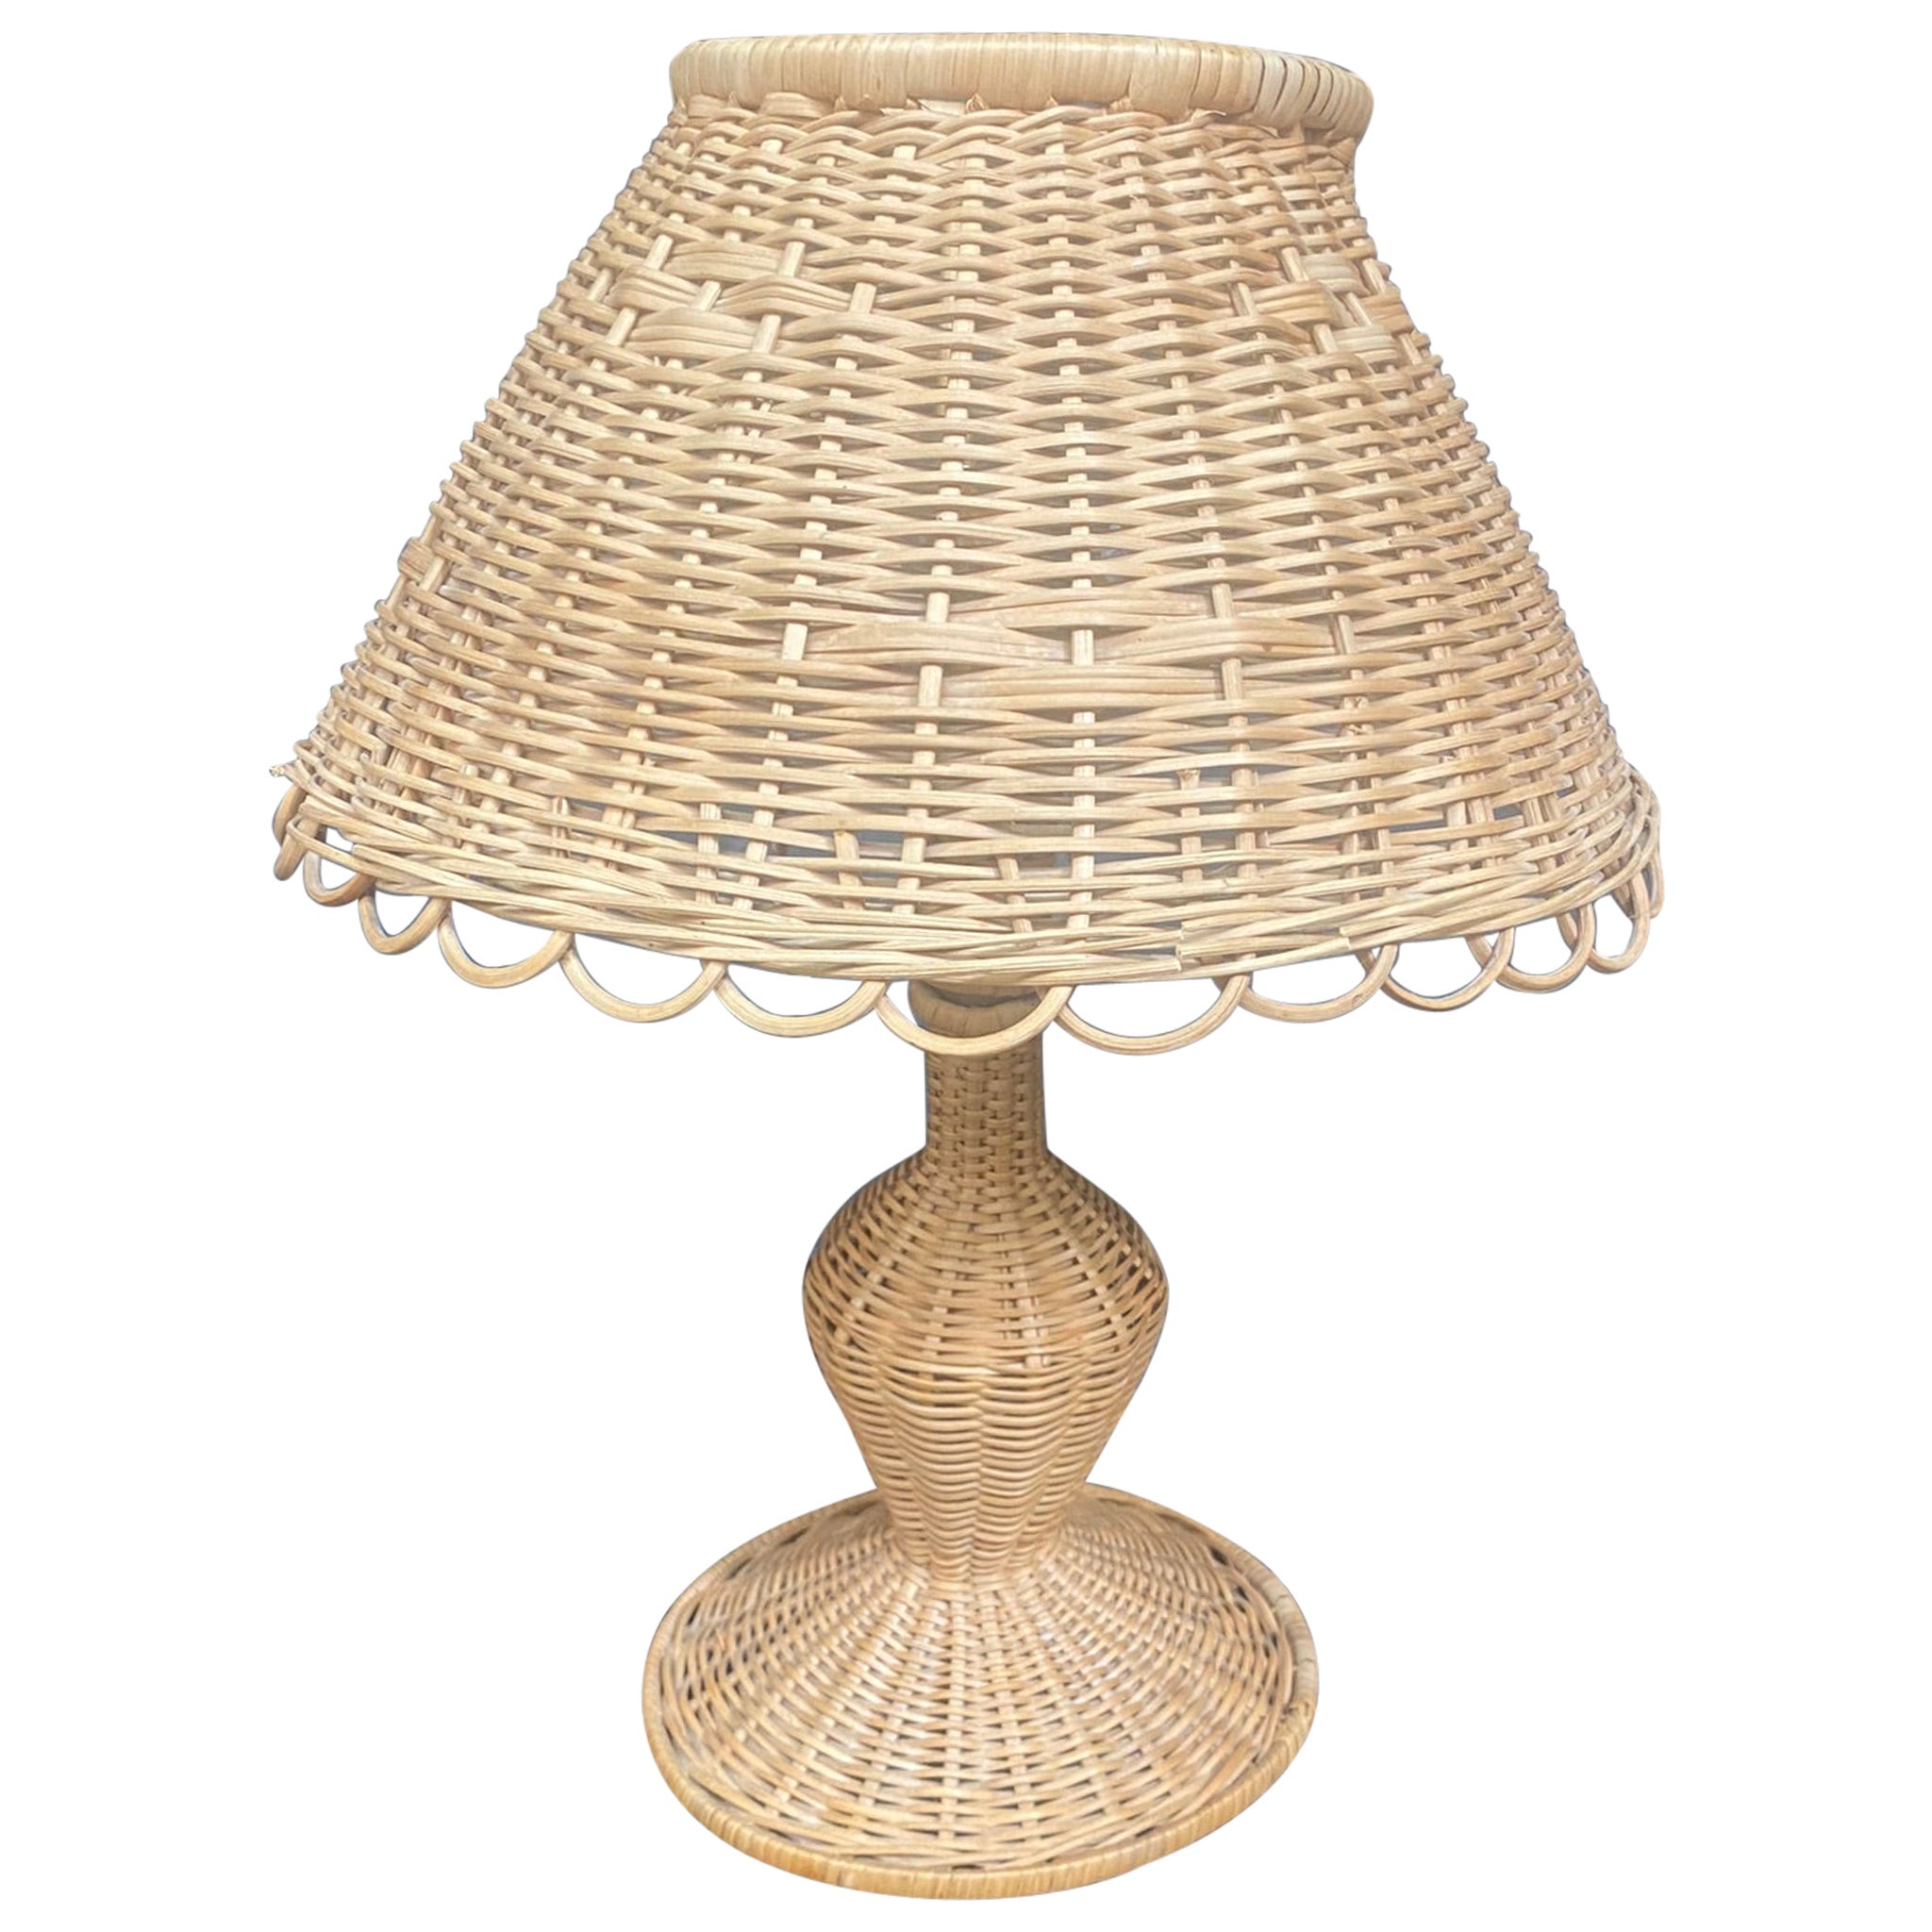 Lampe en rotin et bambou, datant d'environ 1950-1960